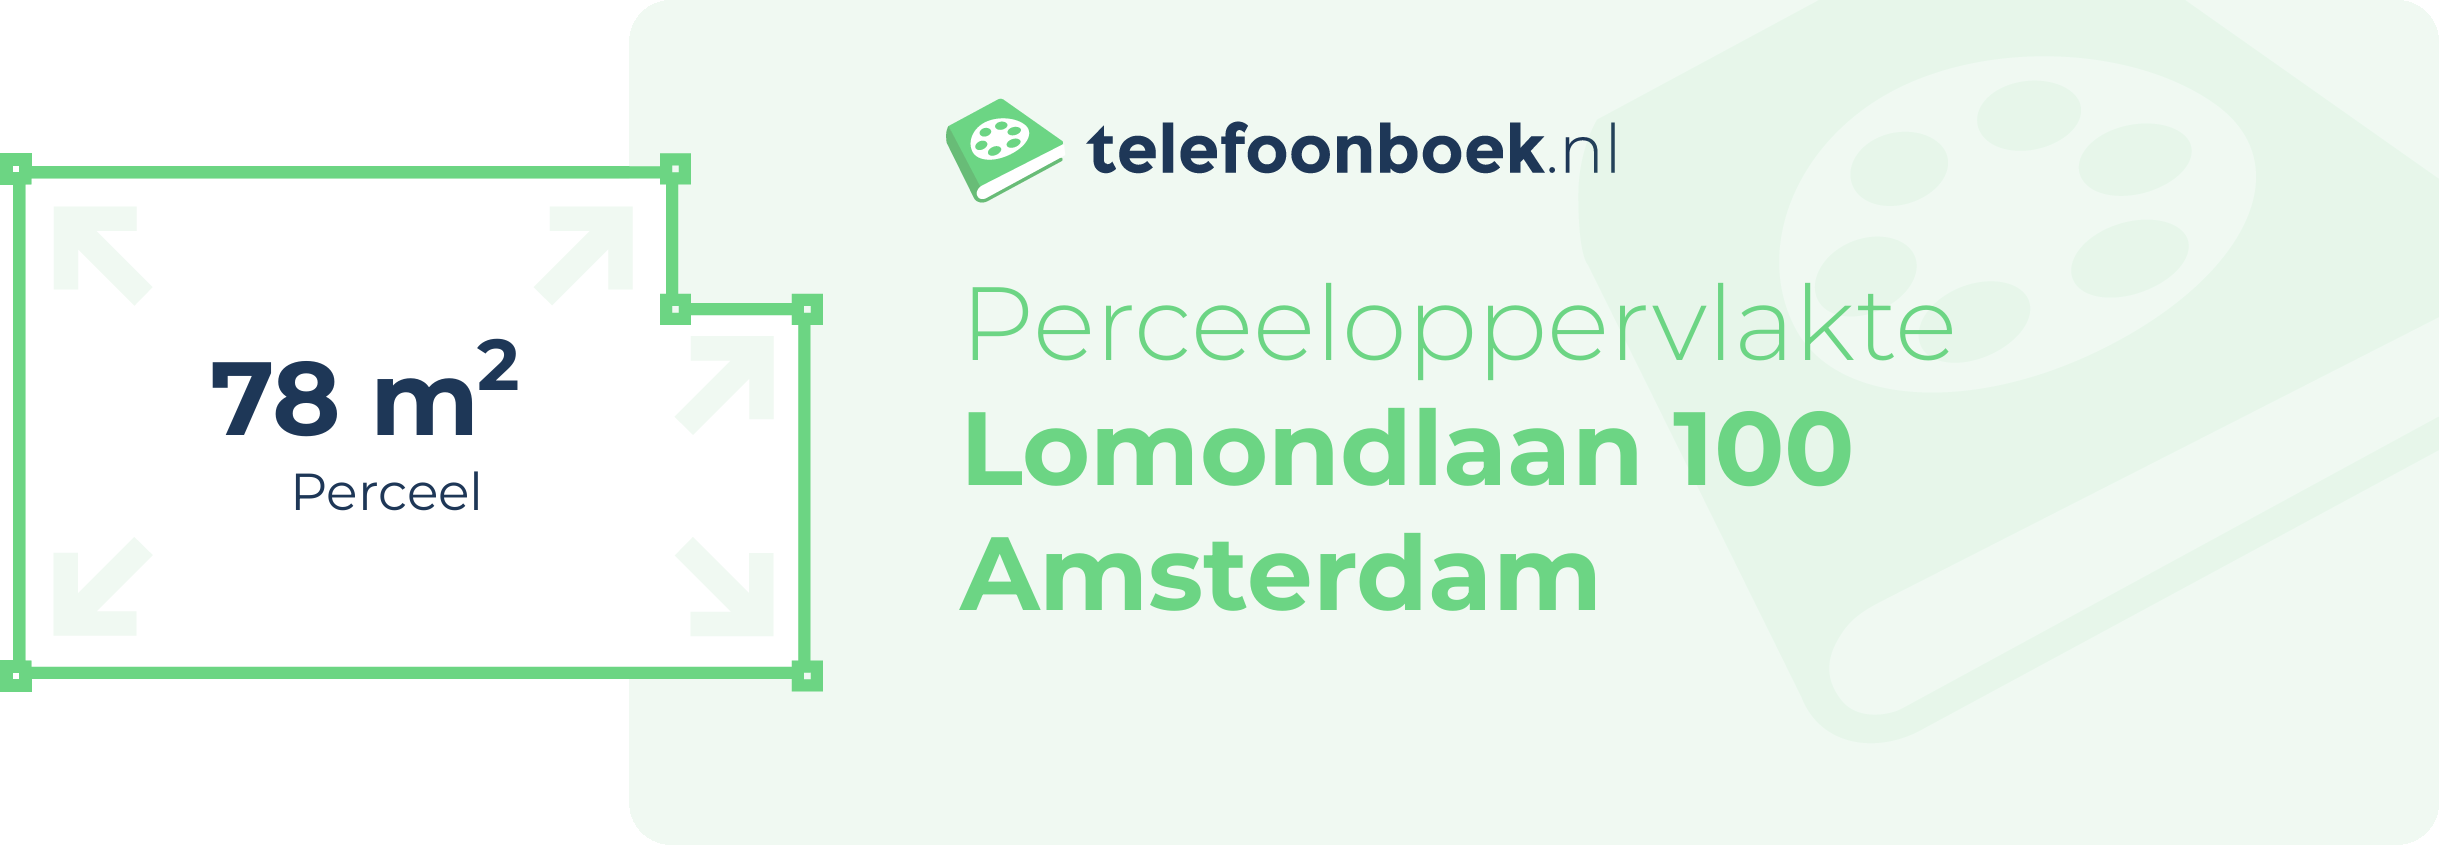 Perceeloppervlakte Lomondlaan 100 Amsterdam